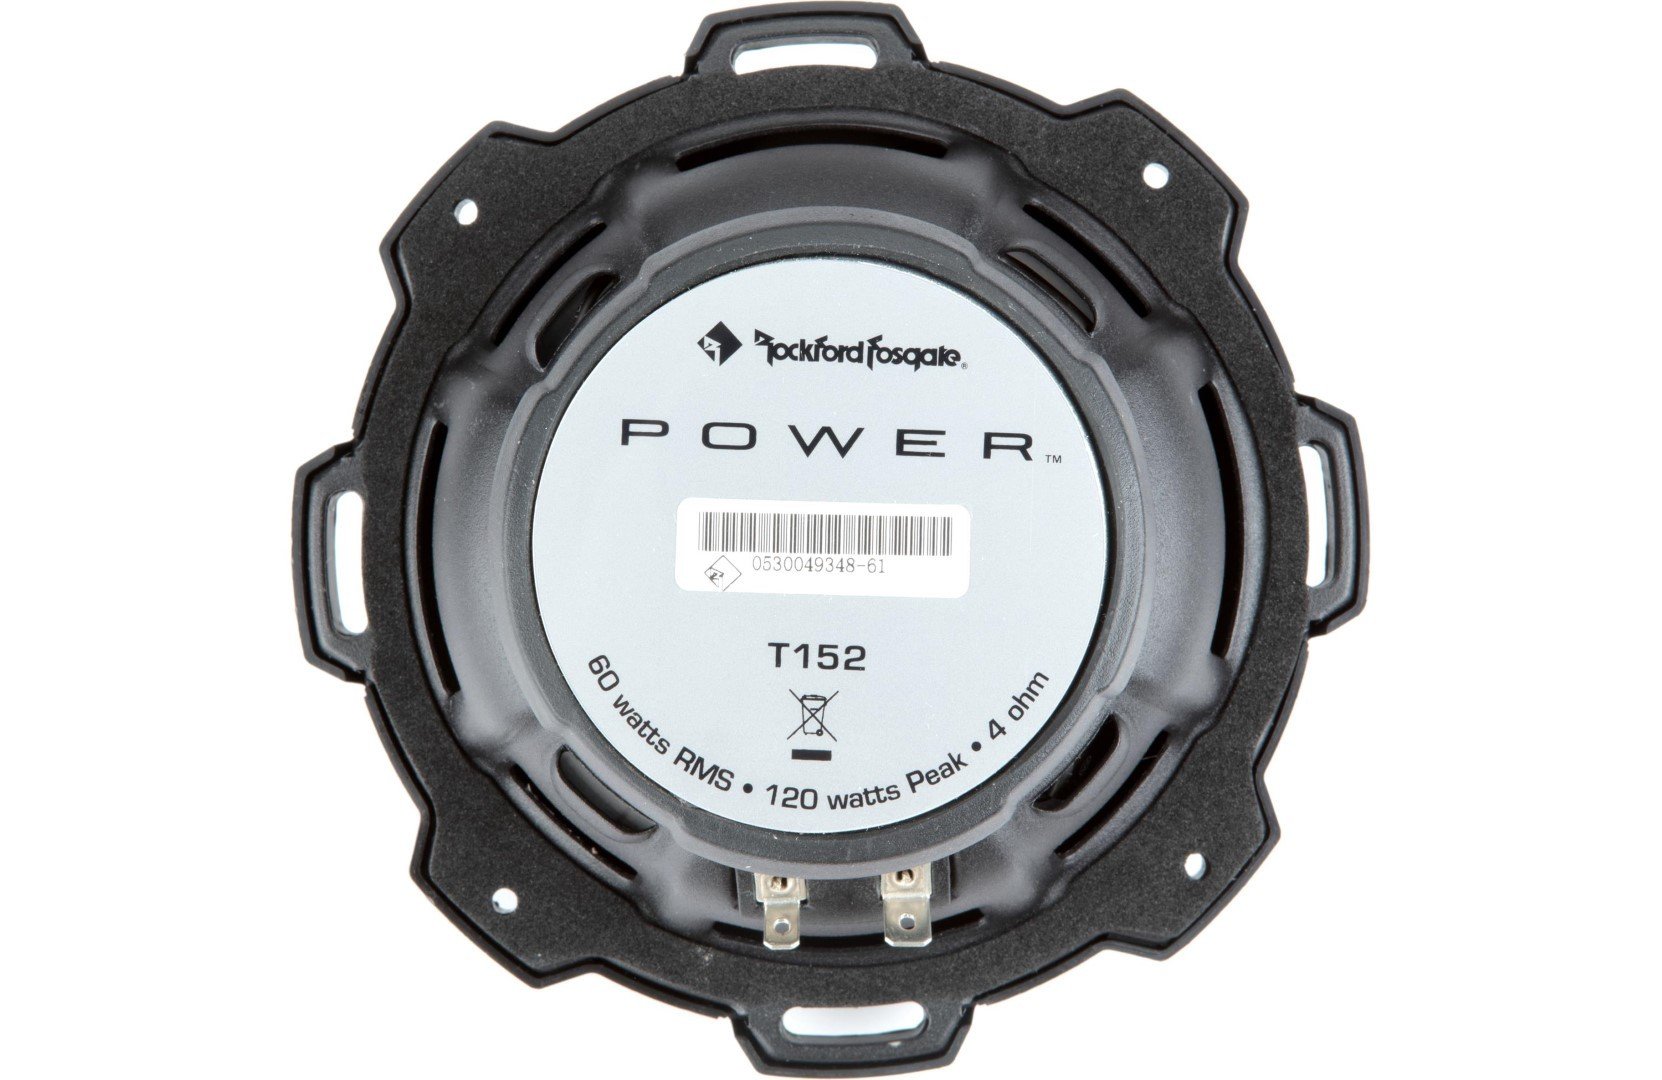 Rockford Fosgate Power T152